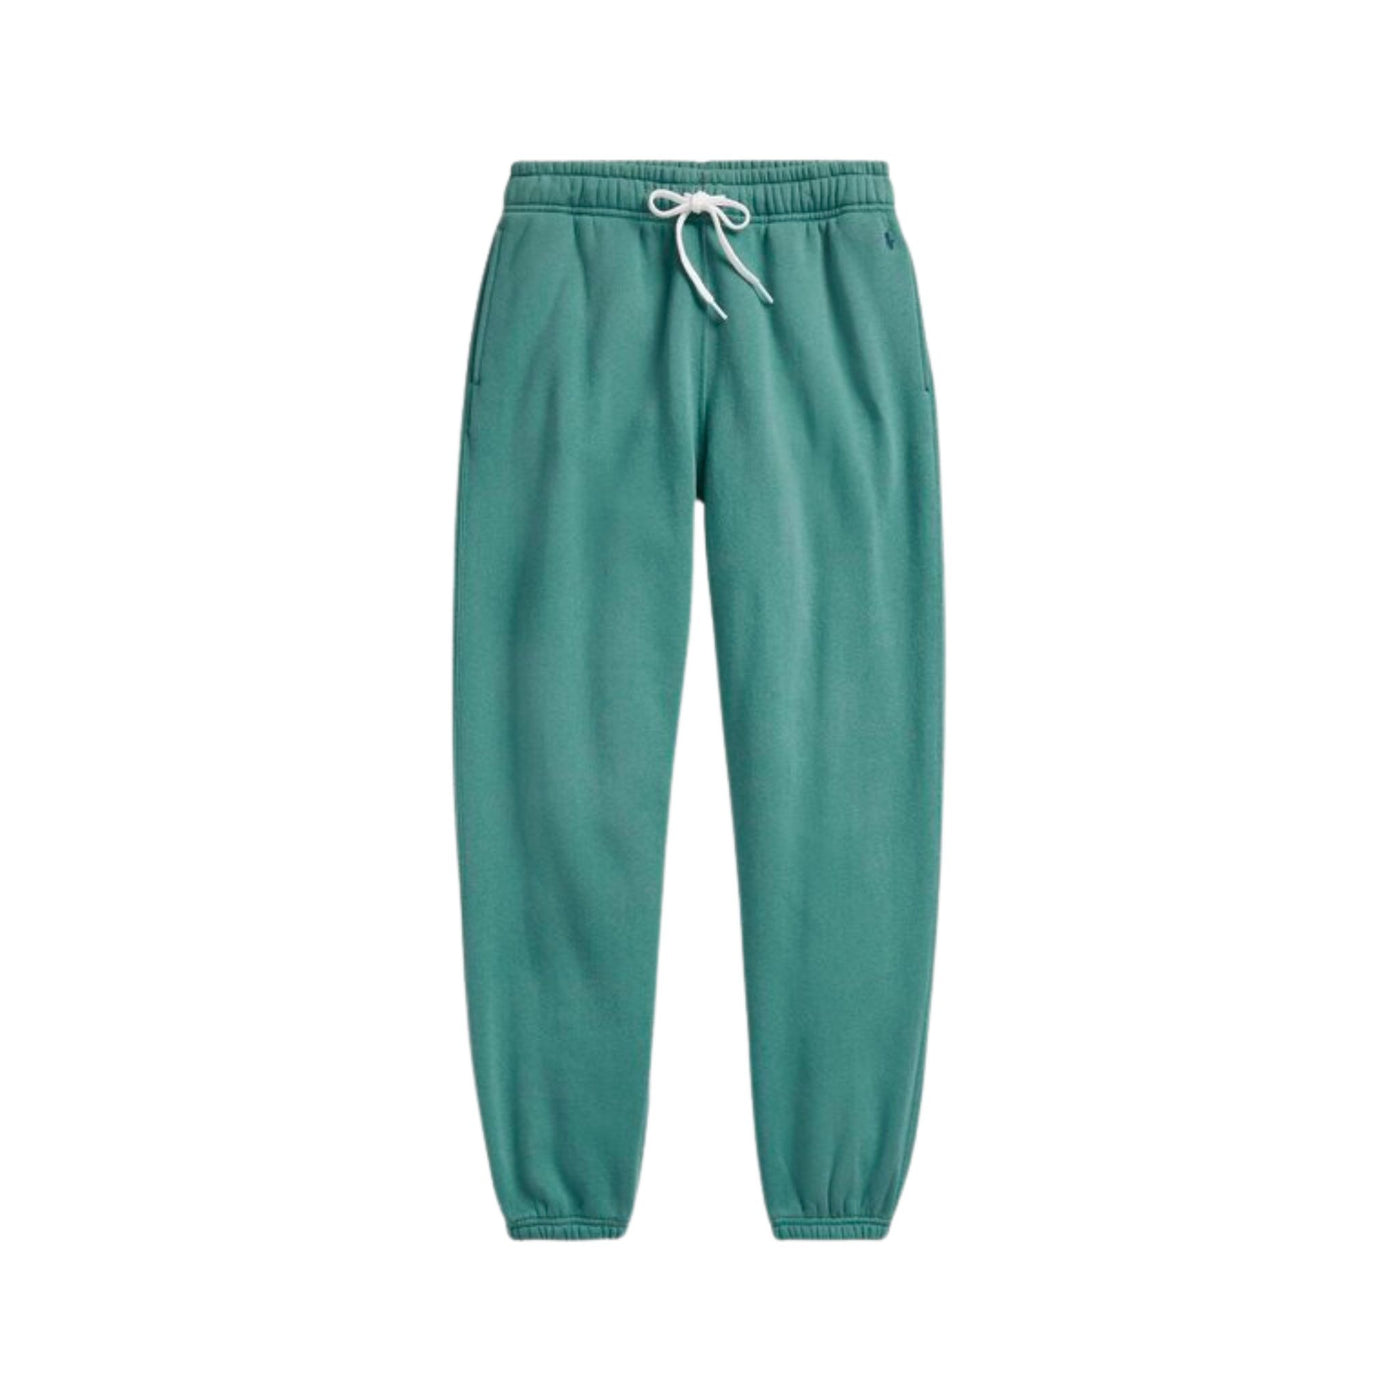 Green Women's Tracksuit Trousers 